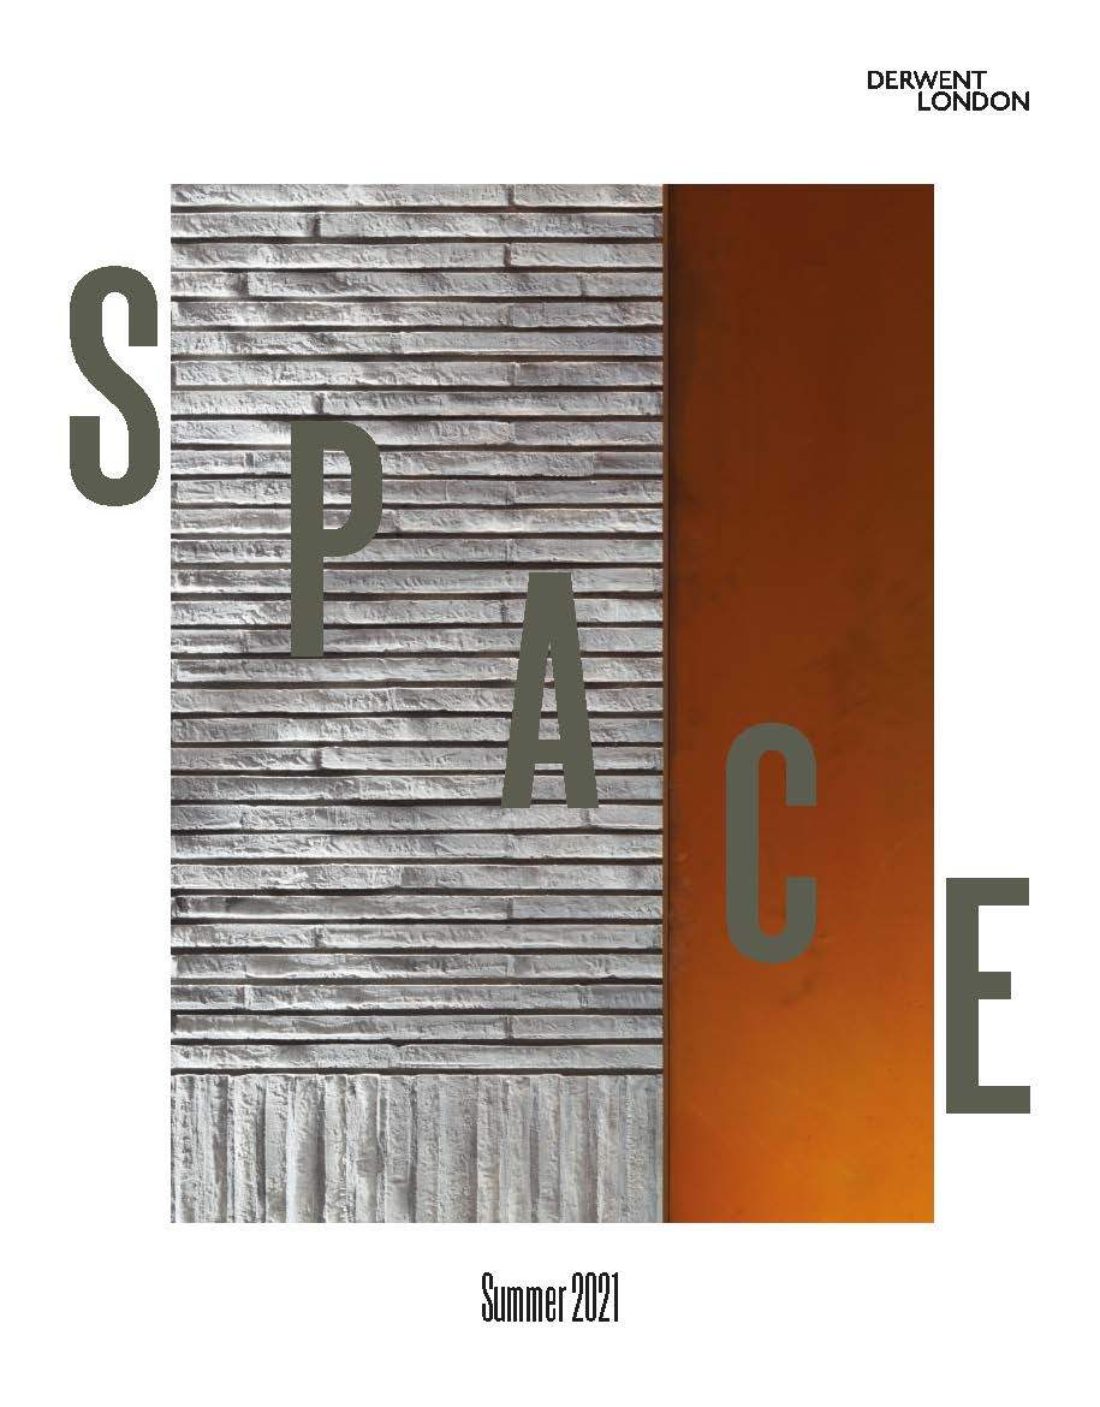 Space Magazine image